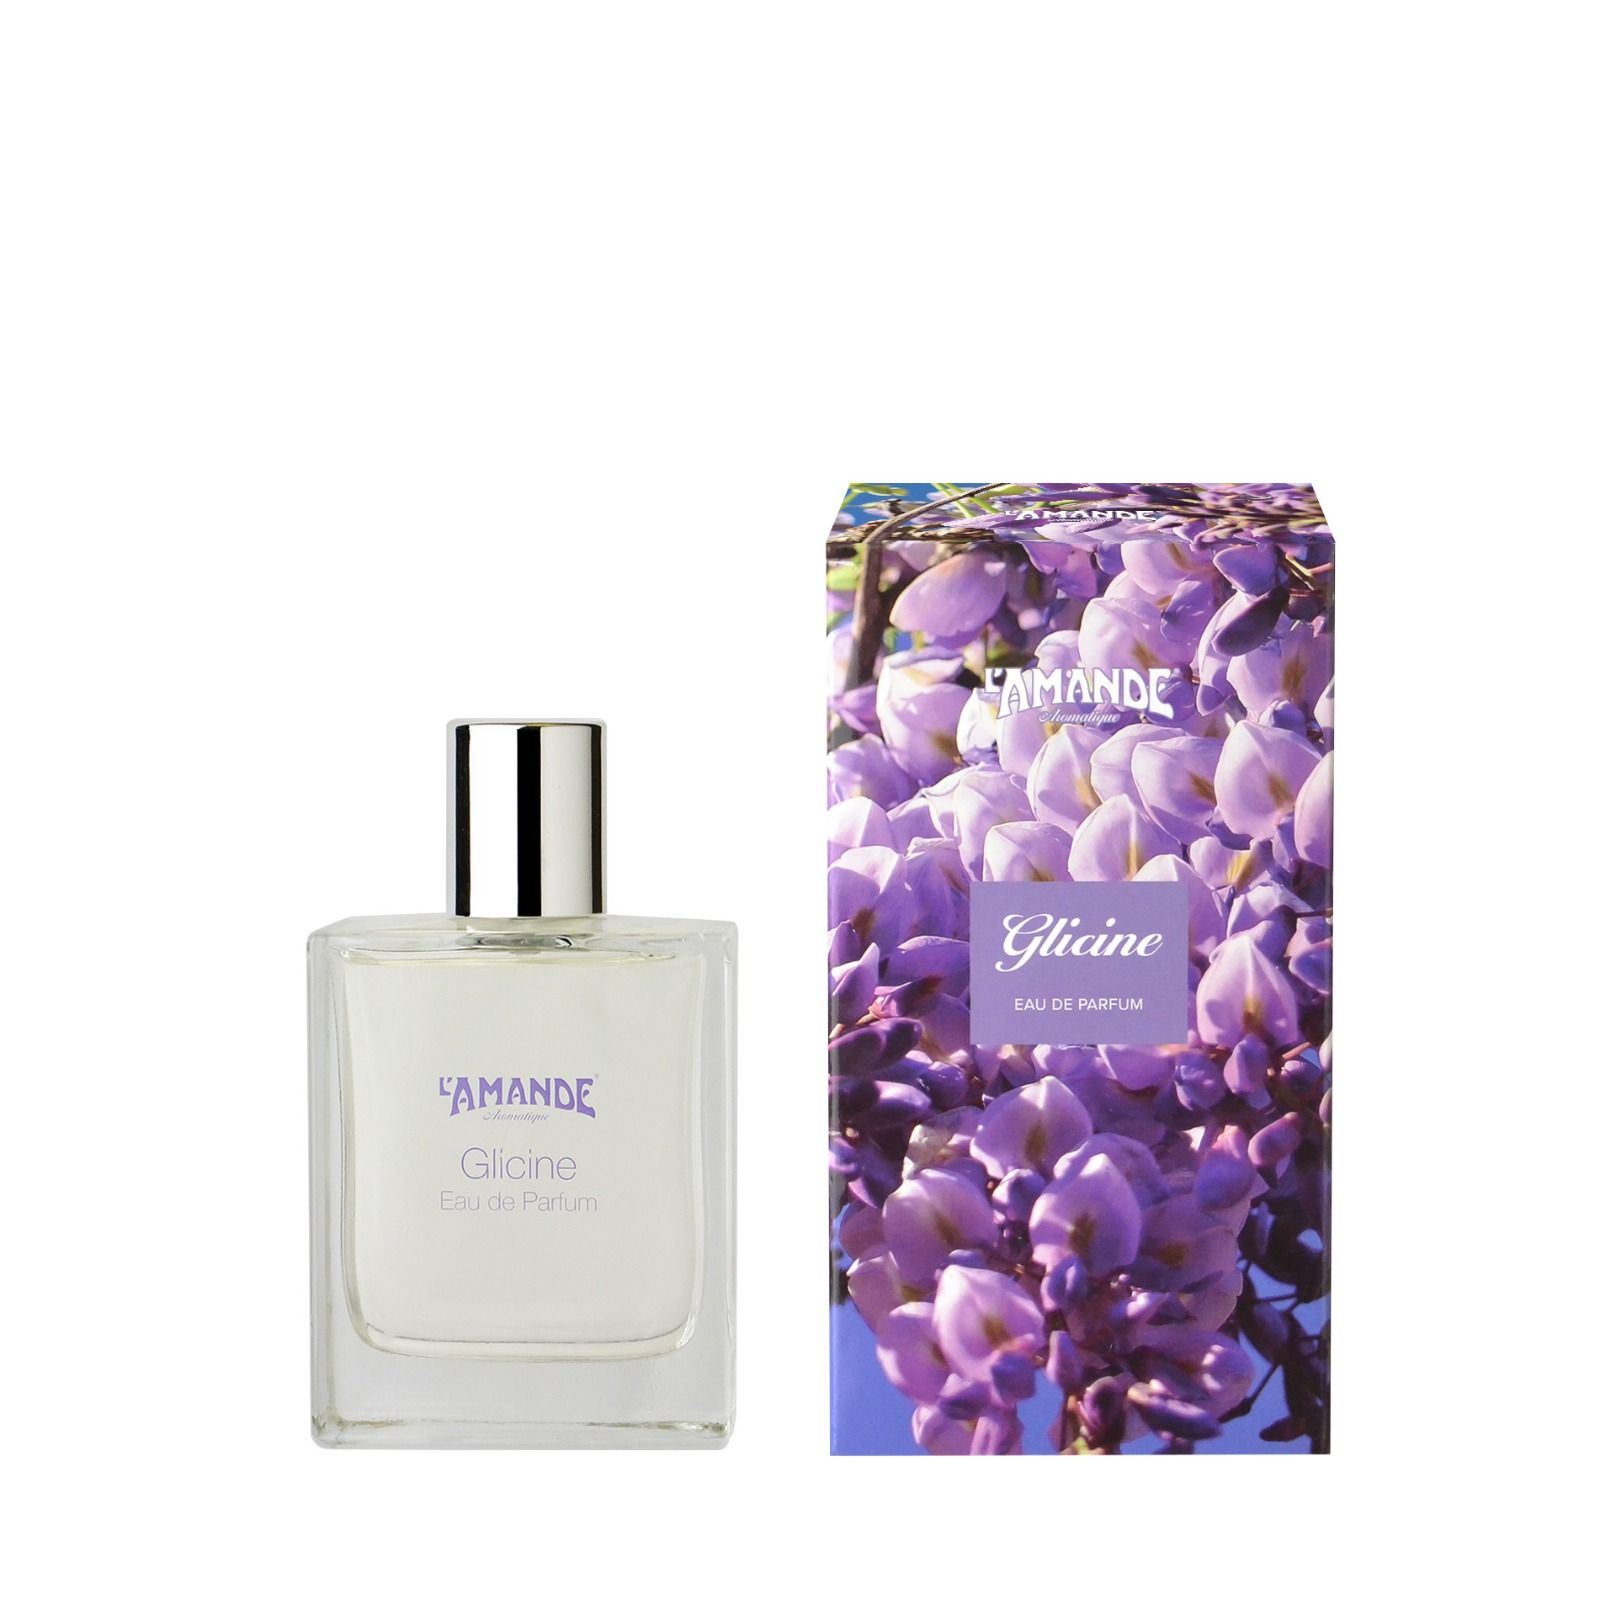 L'Amande Glicine Eau De Parfum 100ml bottle elegantly displayed against a luxurious background.